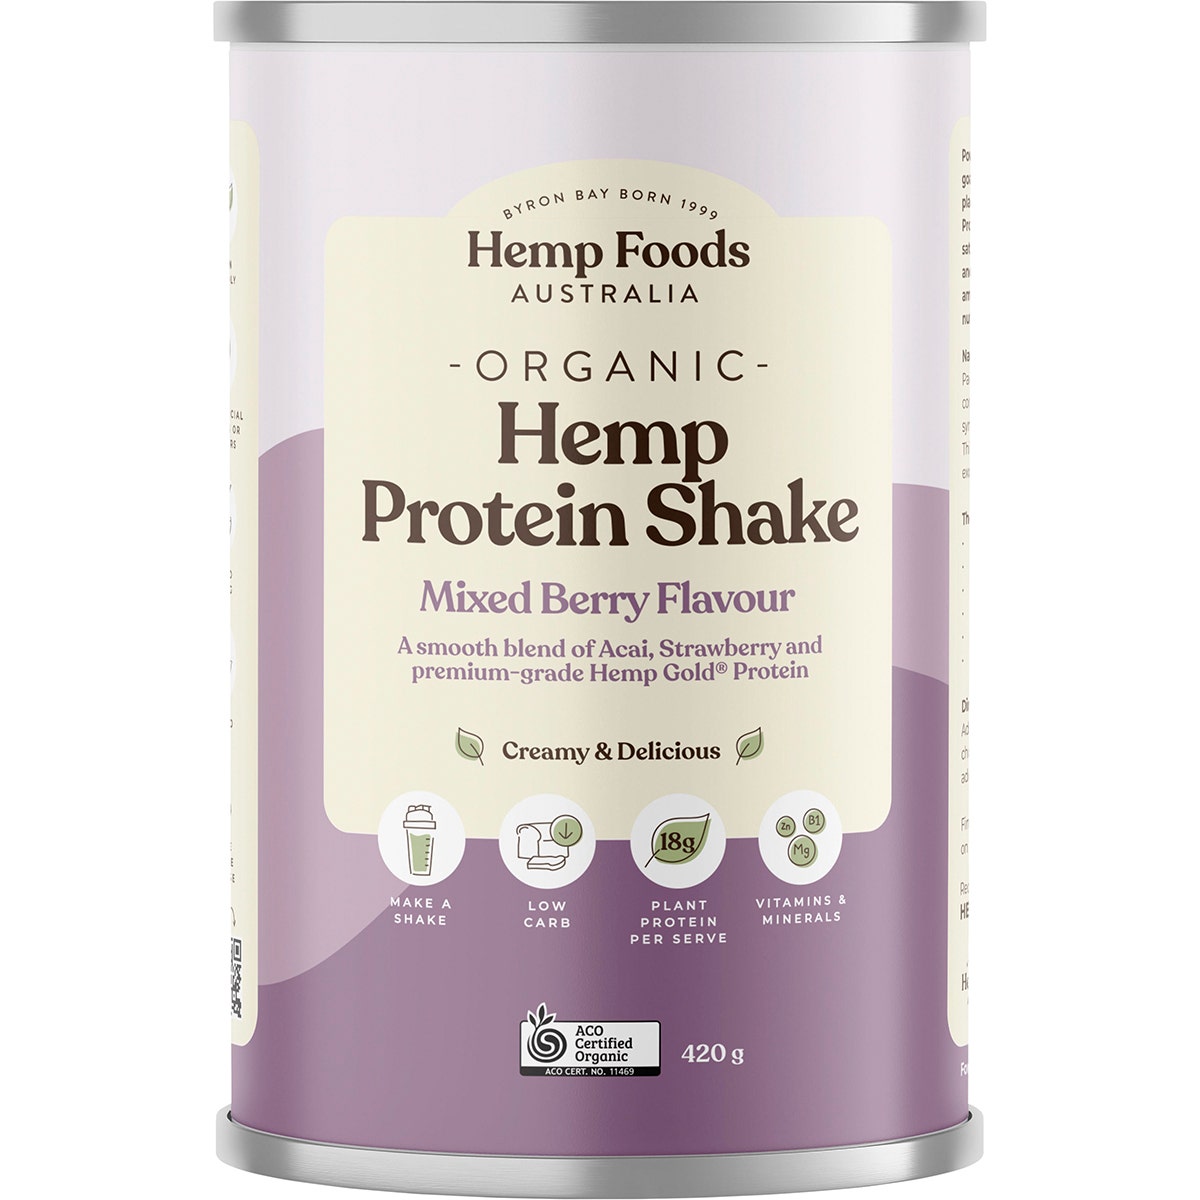 Hemp Foods Australia Organic Hemp Protein Powder 420g